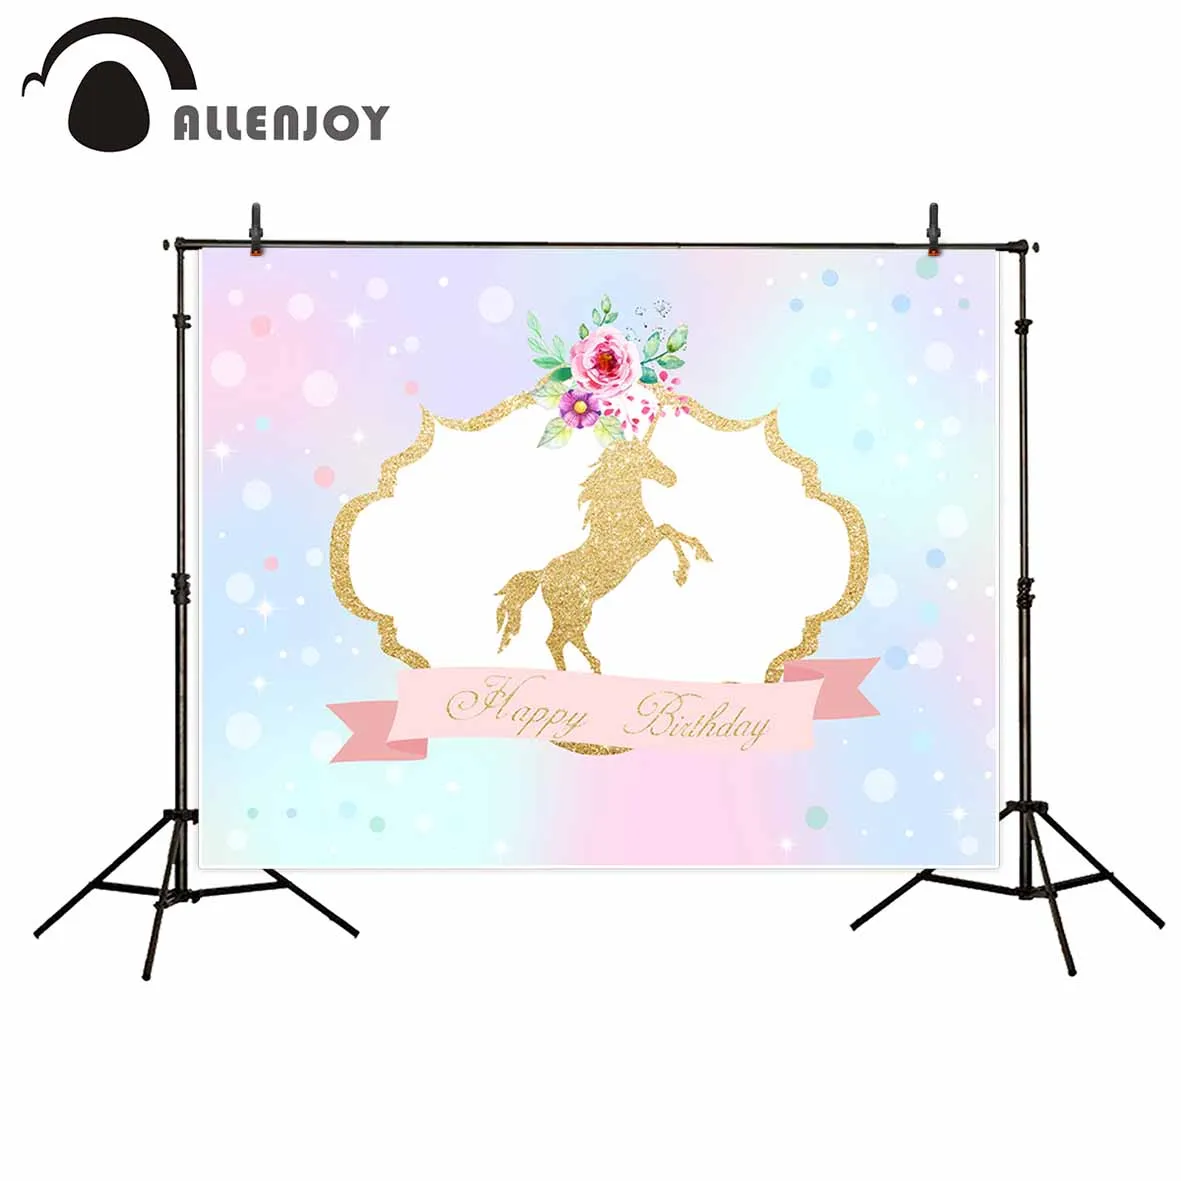 Allenjoy fotografie pozadia Zlatý jednorožec kvety narodeniny pozadie farebné bubliny foto pozadie pre deti photocall